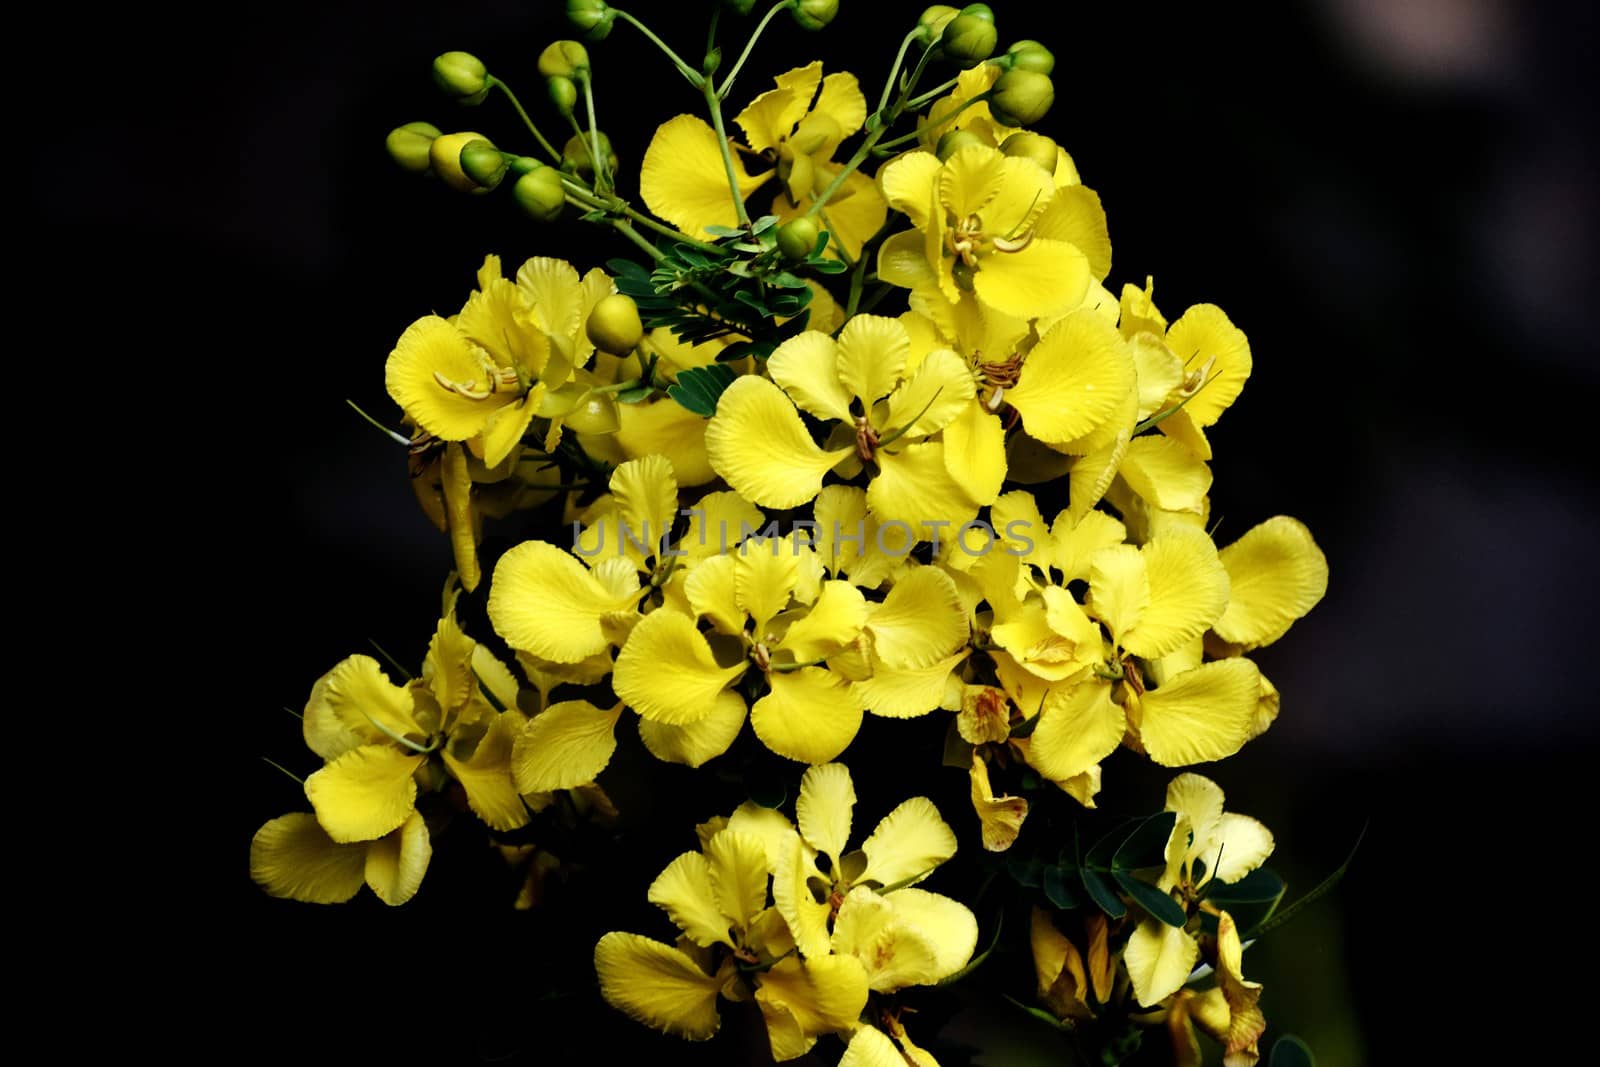 Bunch of yellow flower by ravindrabhu165165@gmail.com